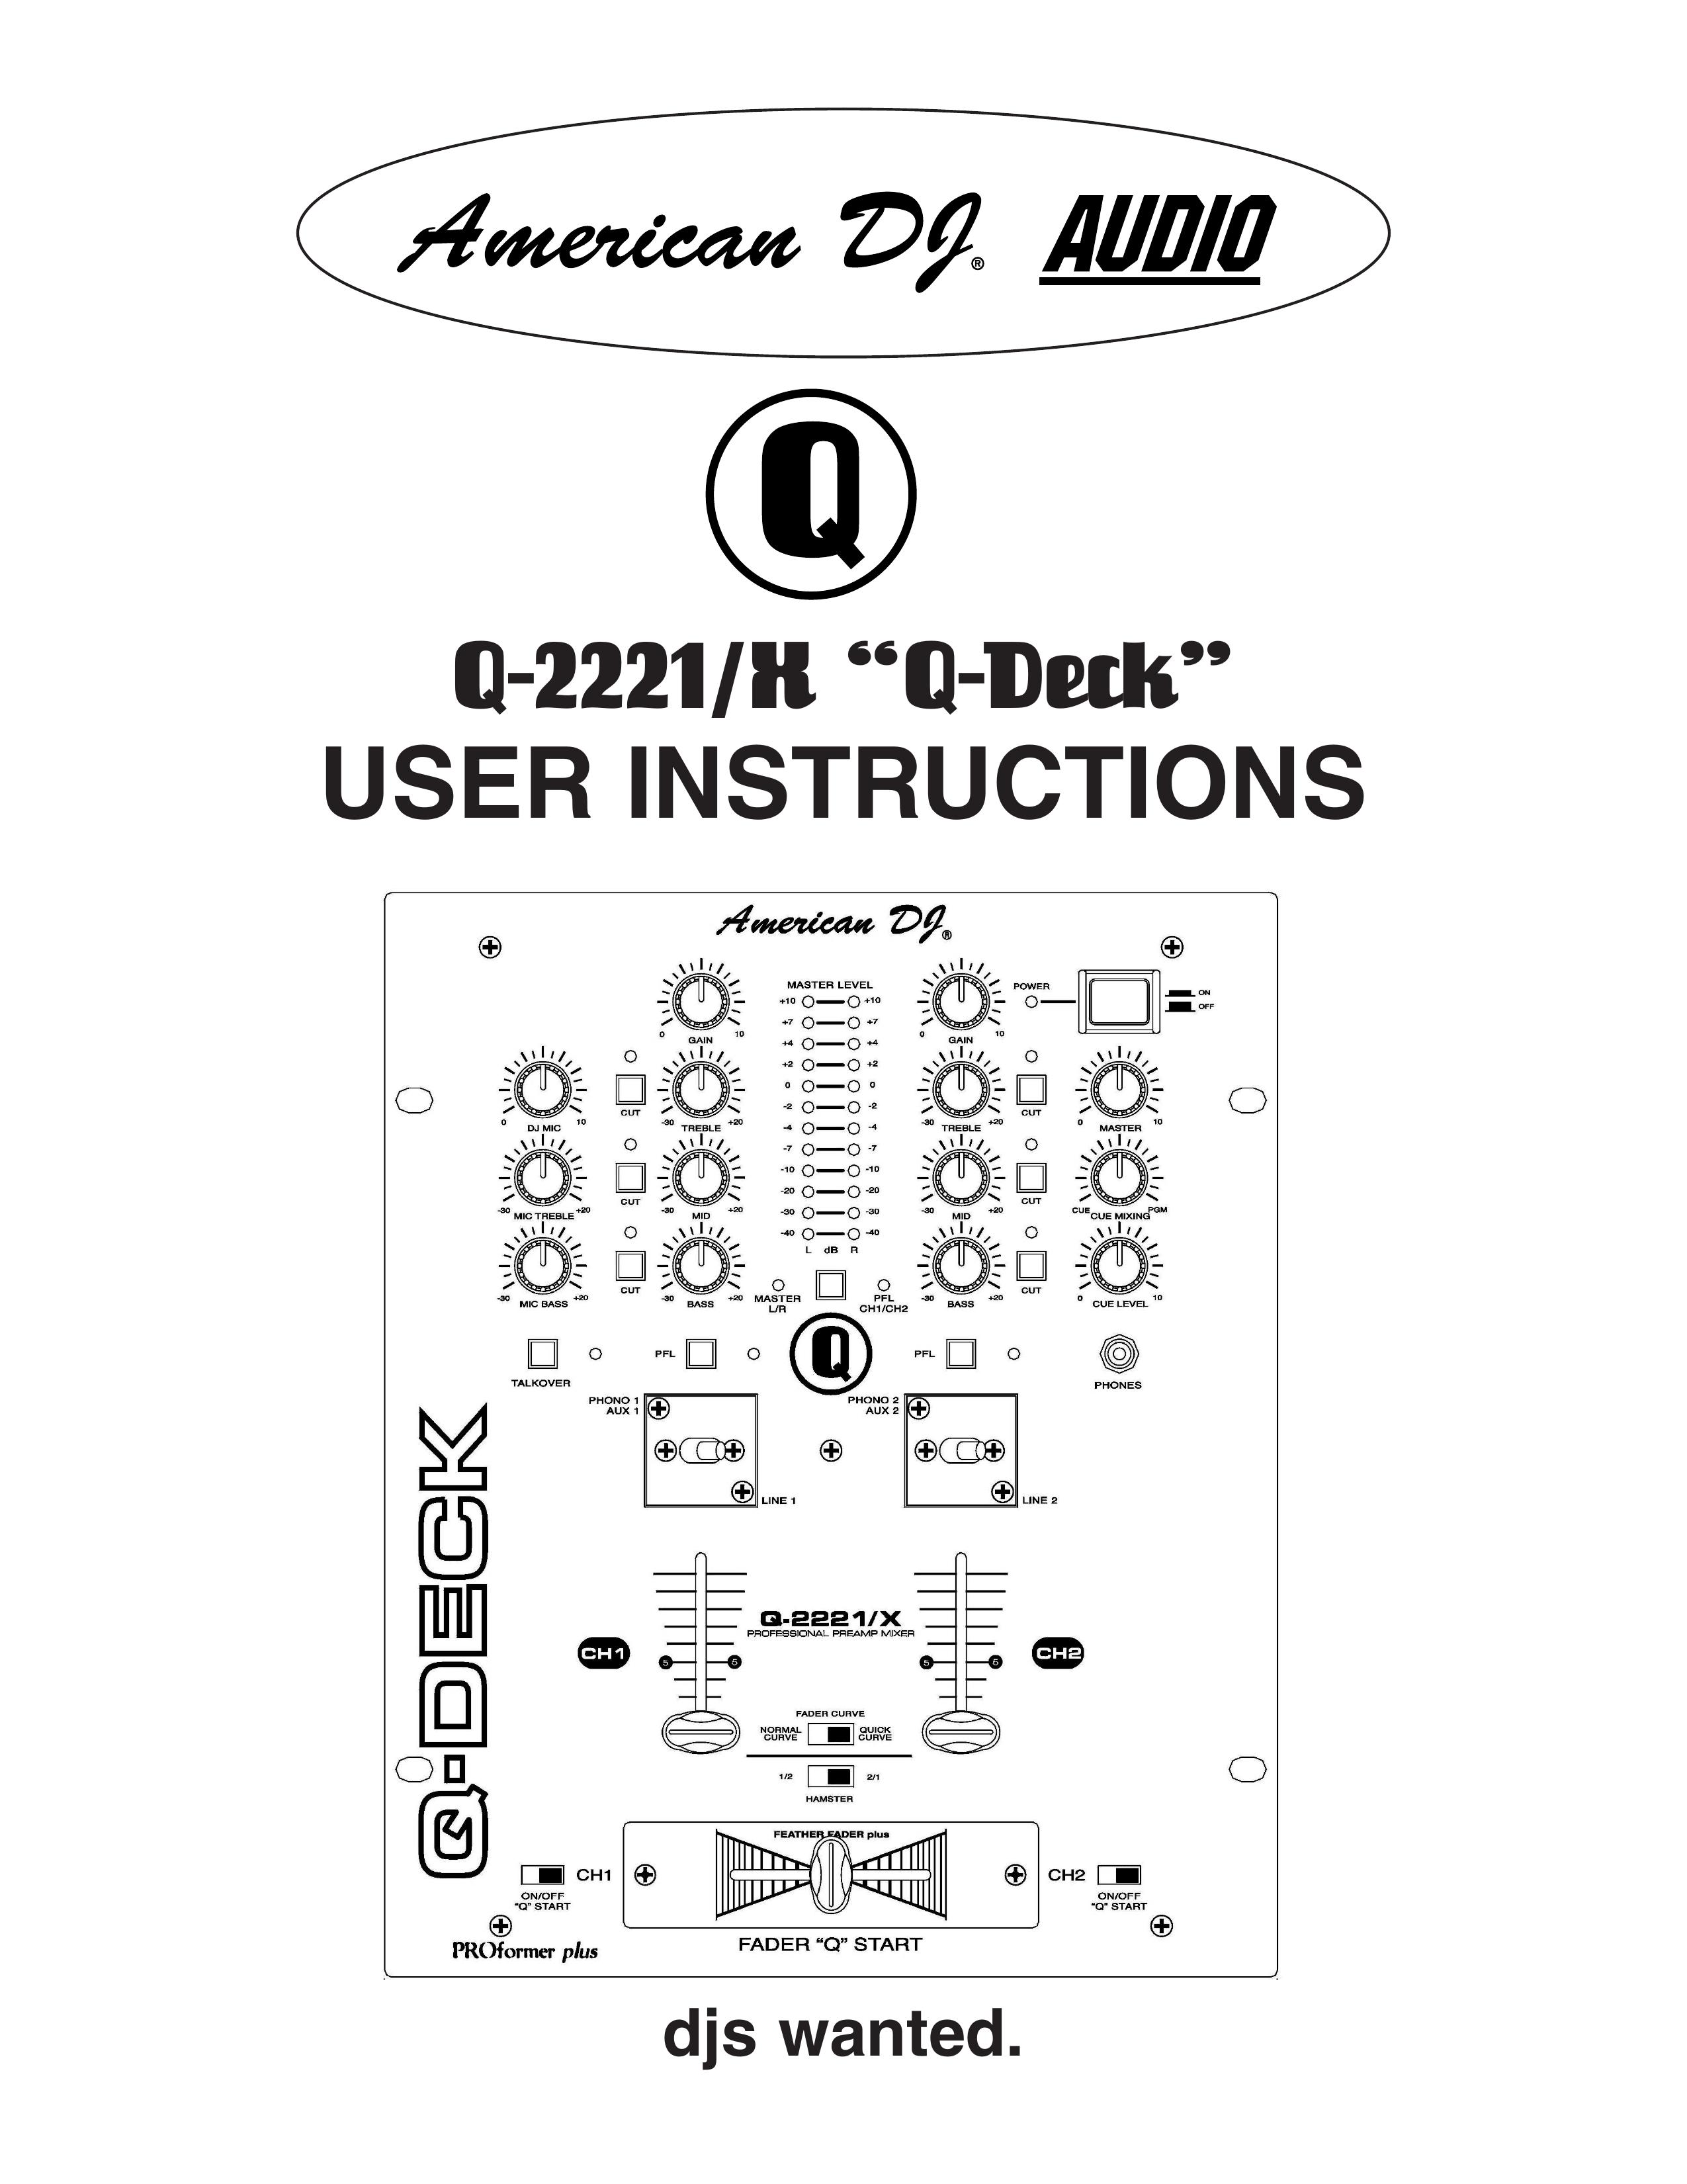 American Audio Q-2221/X DJ Equipment User Manual